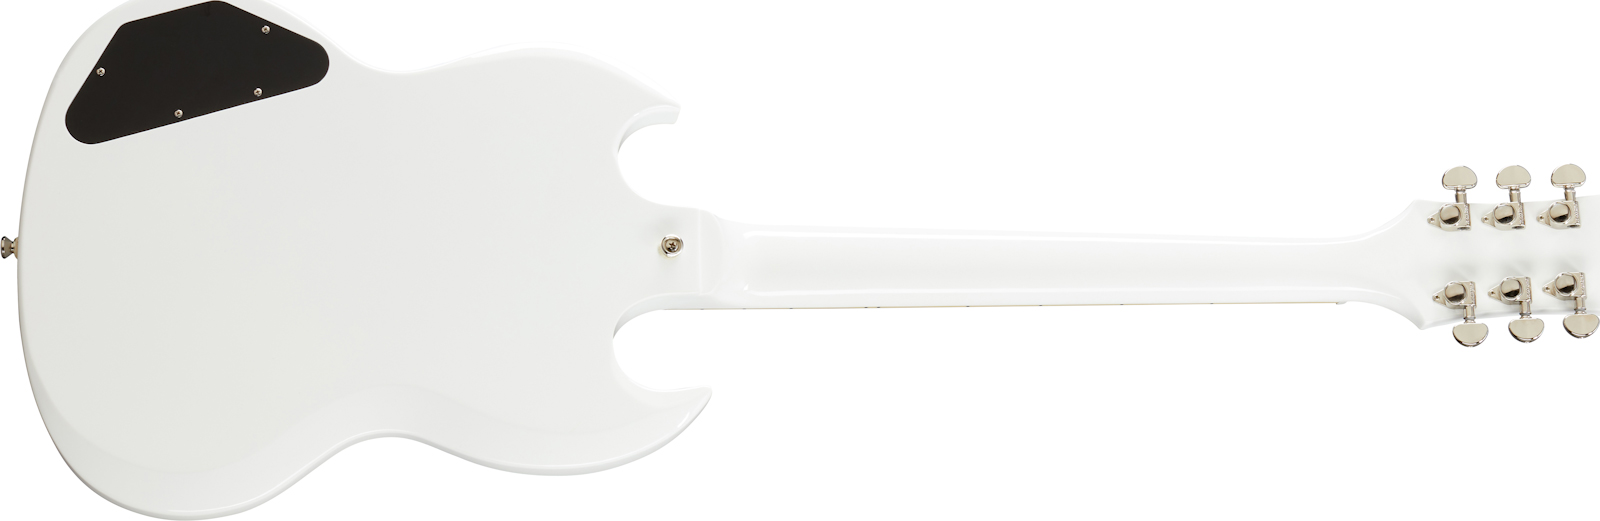 Epiphone Sg Standard 2h Ht Lau - Alpine White - Double Cut E-Gitarre - Variation 1